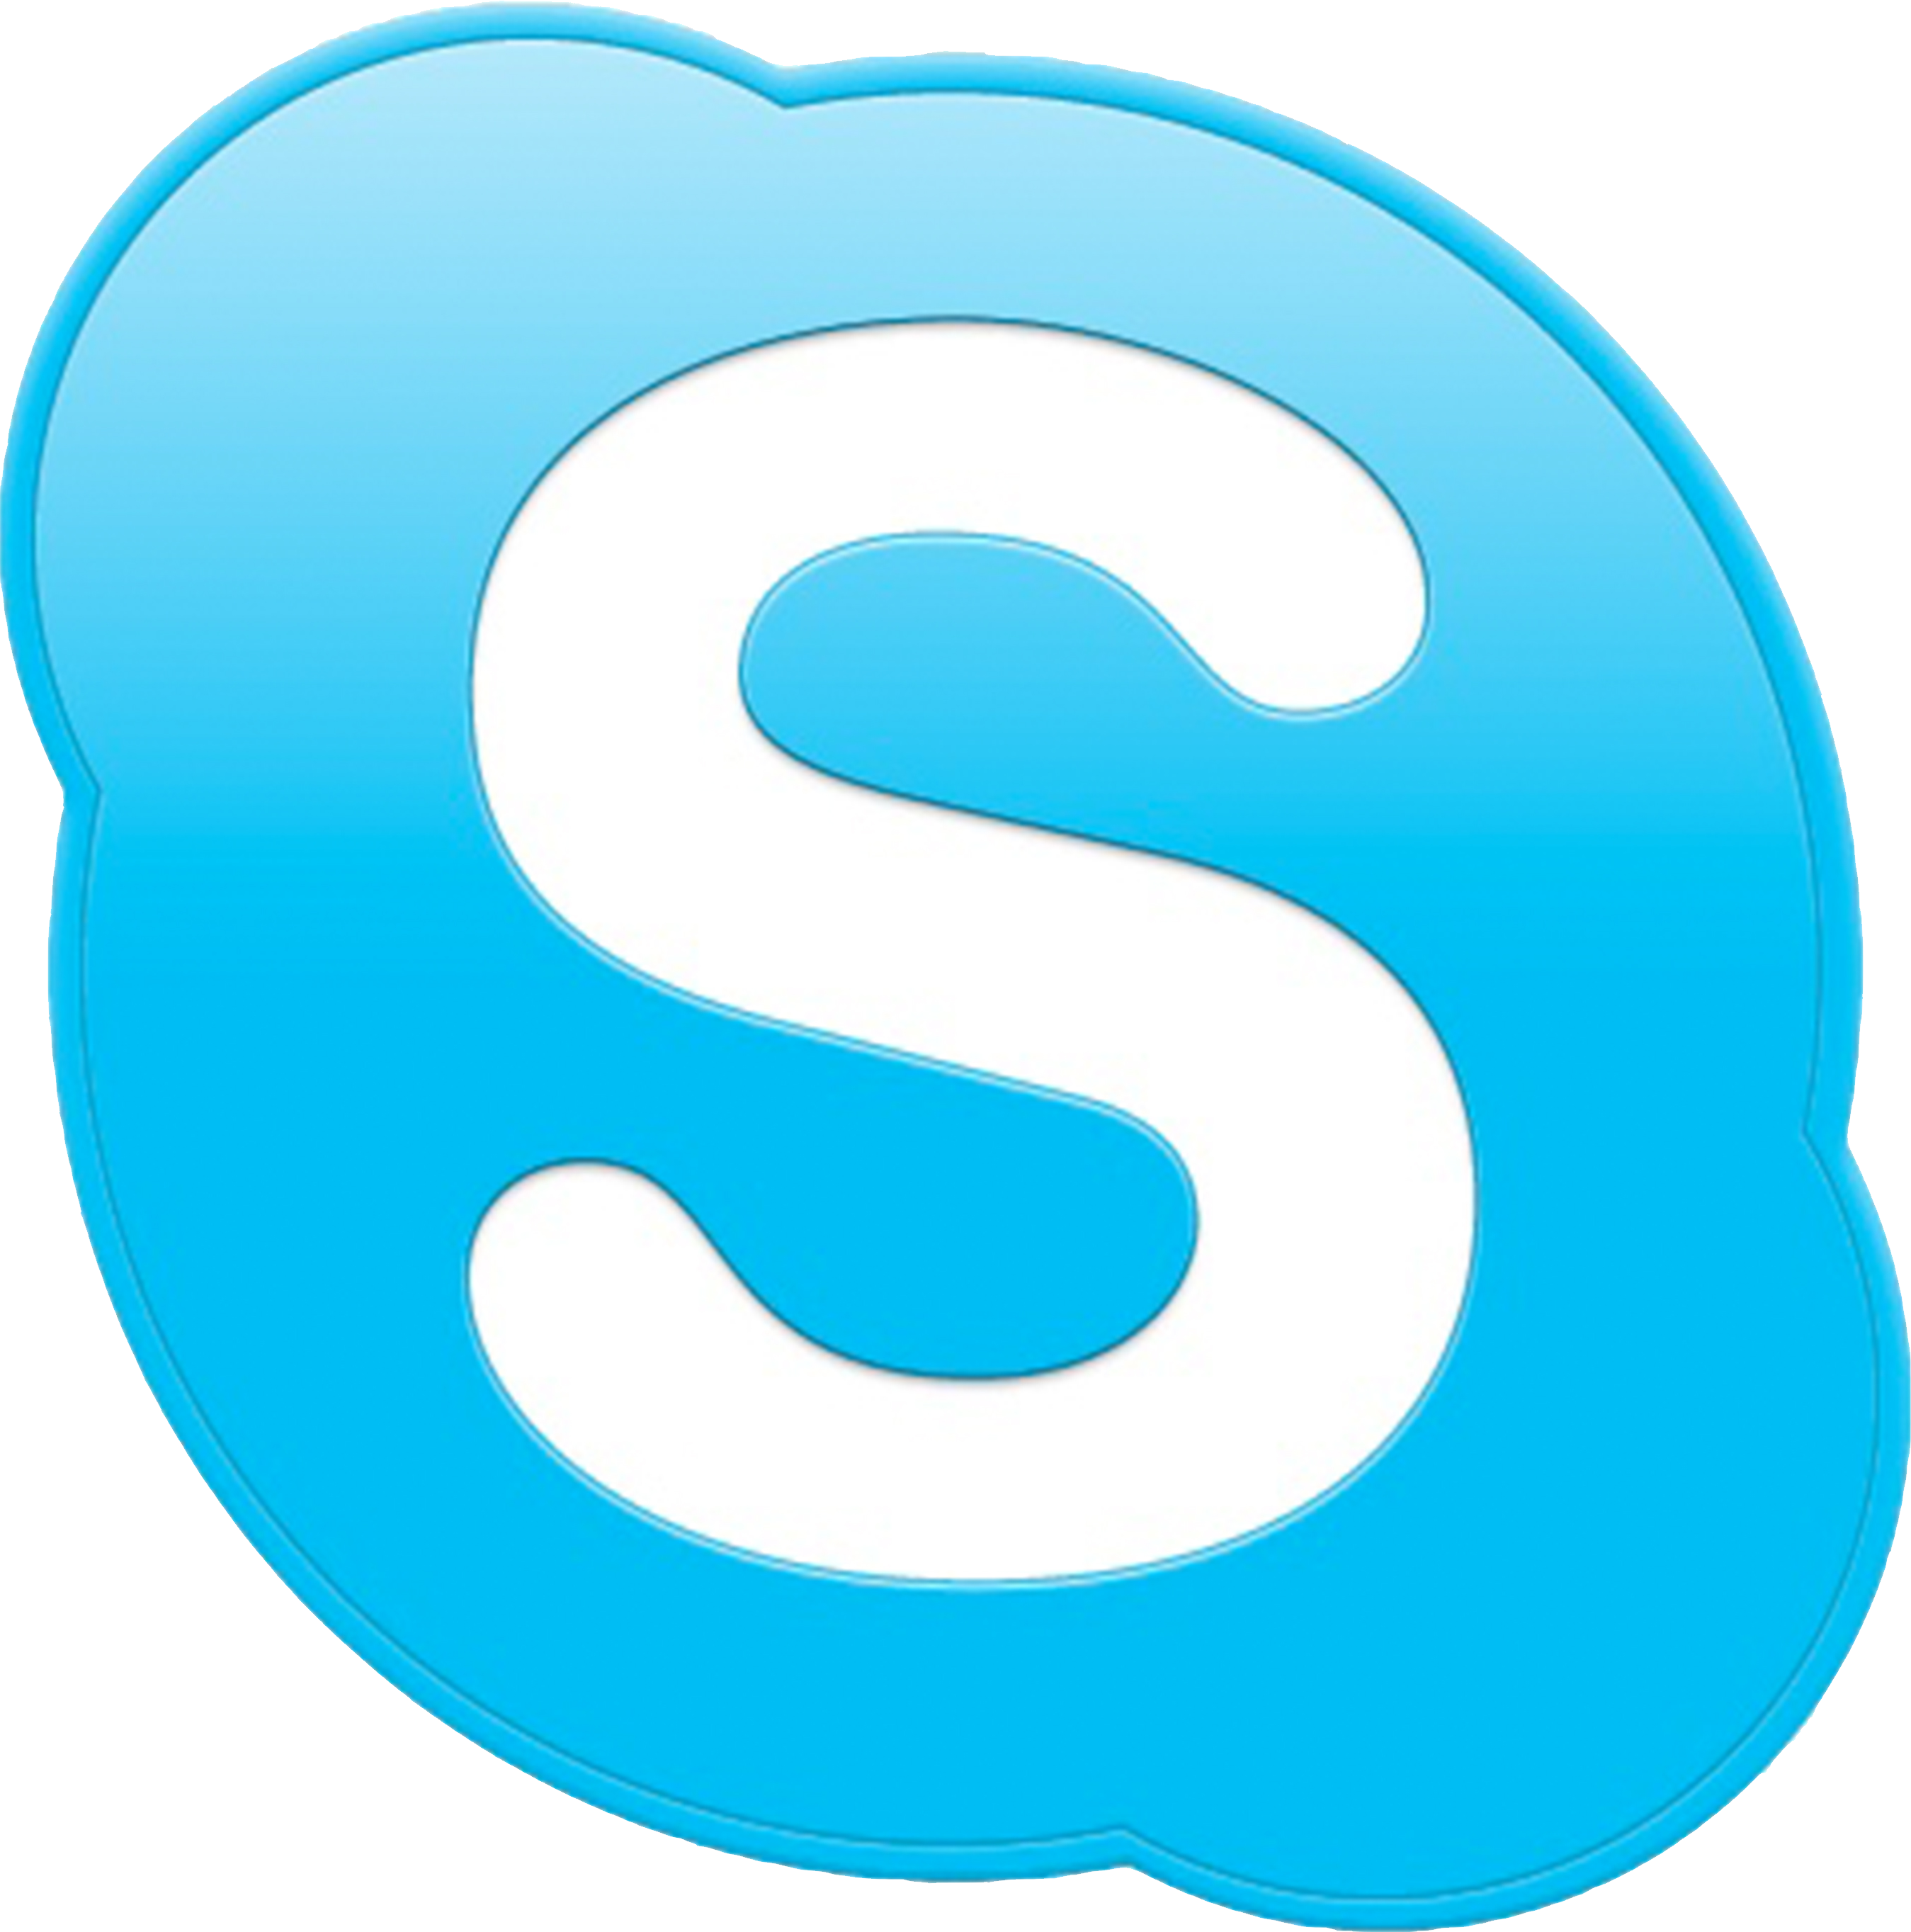 Download Skype Logo Png Vecto